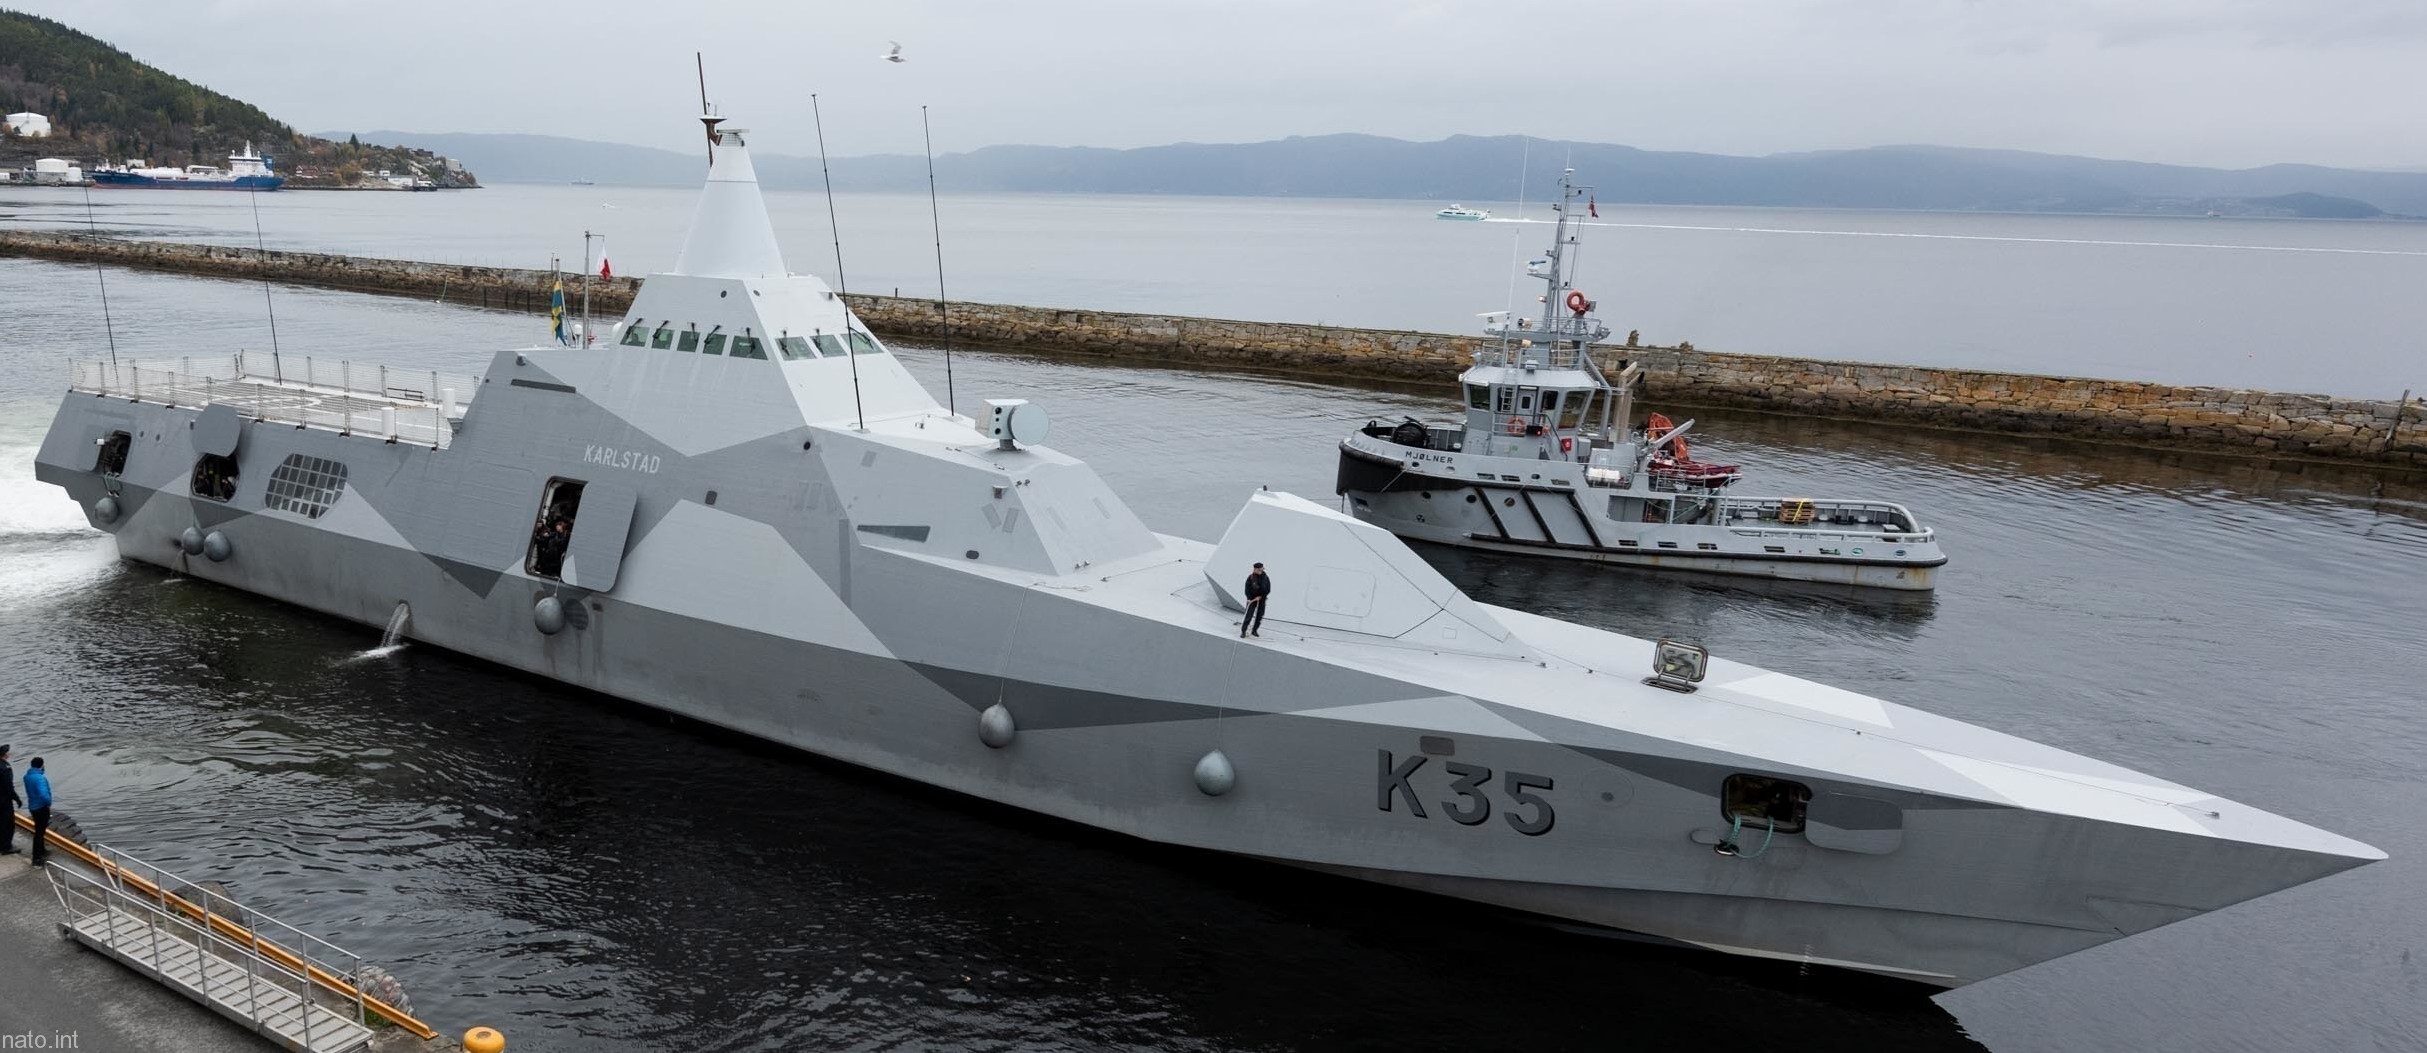 k35 hswms hms karlstad visby class corvette royal swedish navy svenska marinen 16